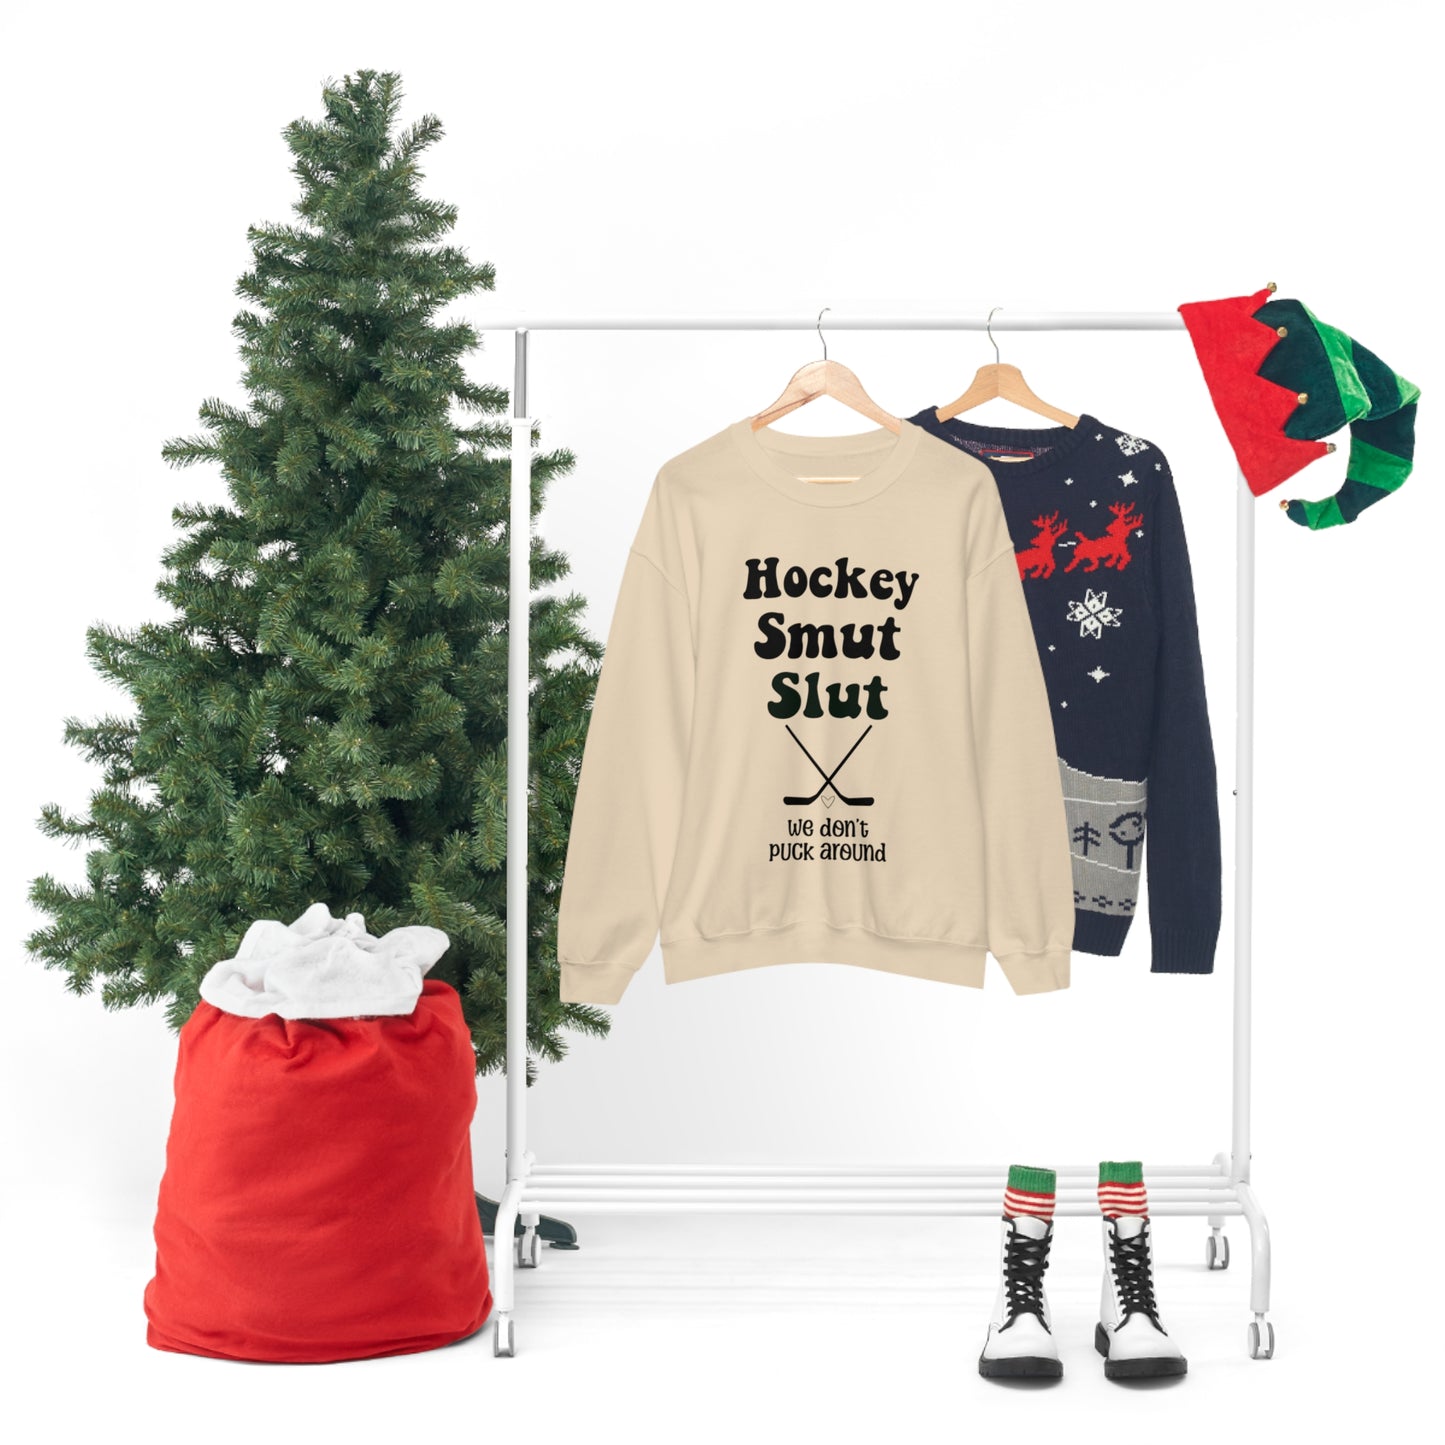 Hockey Smut Slut Crewneck Sweatshirt